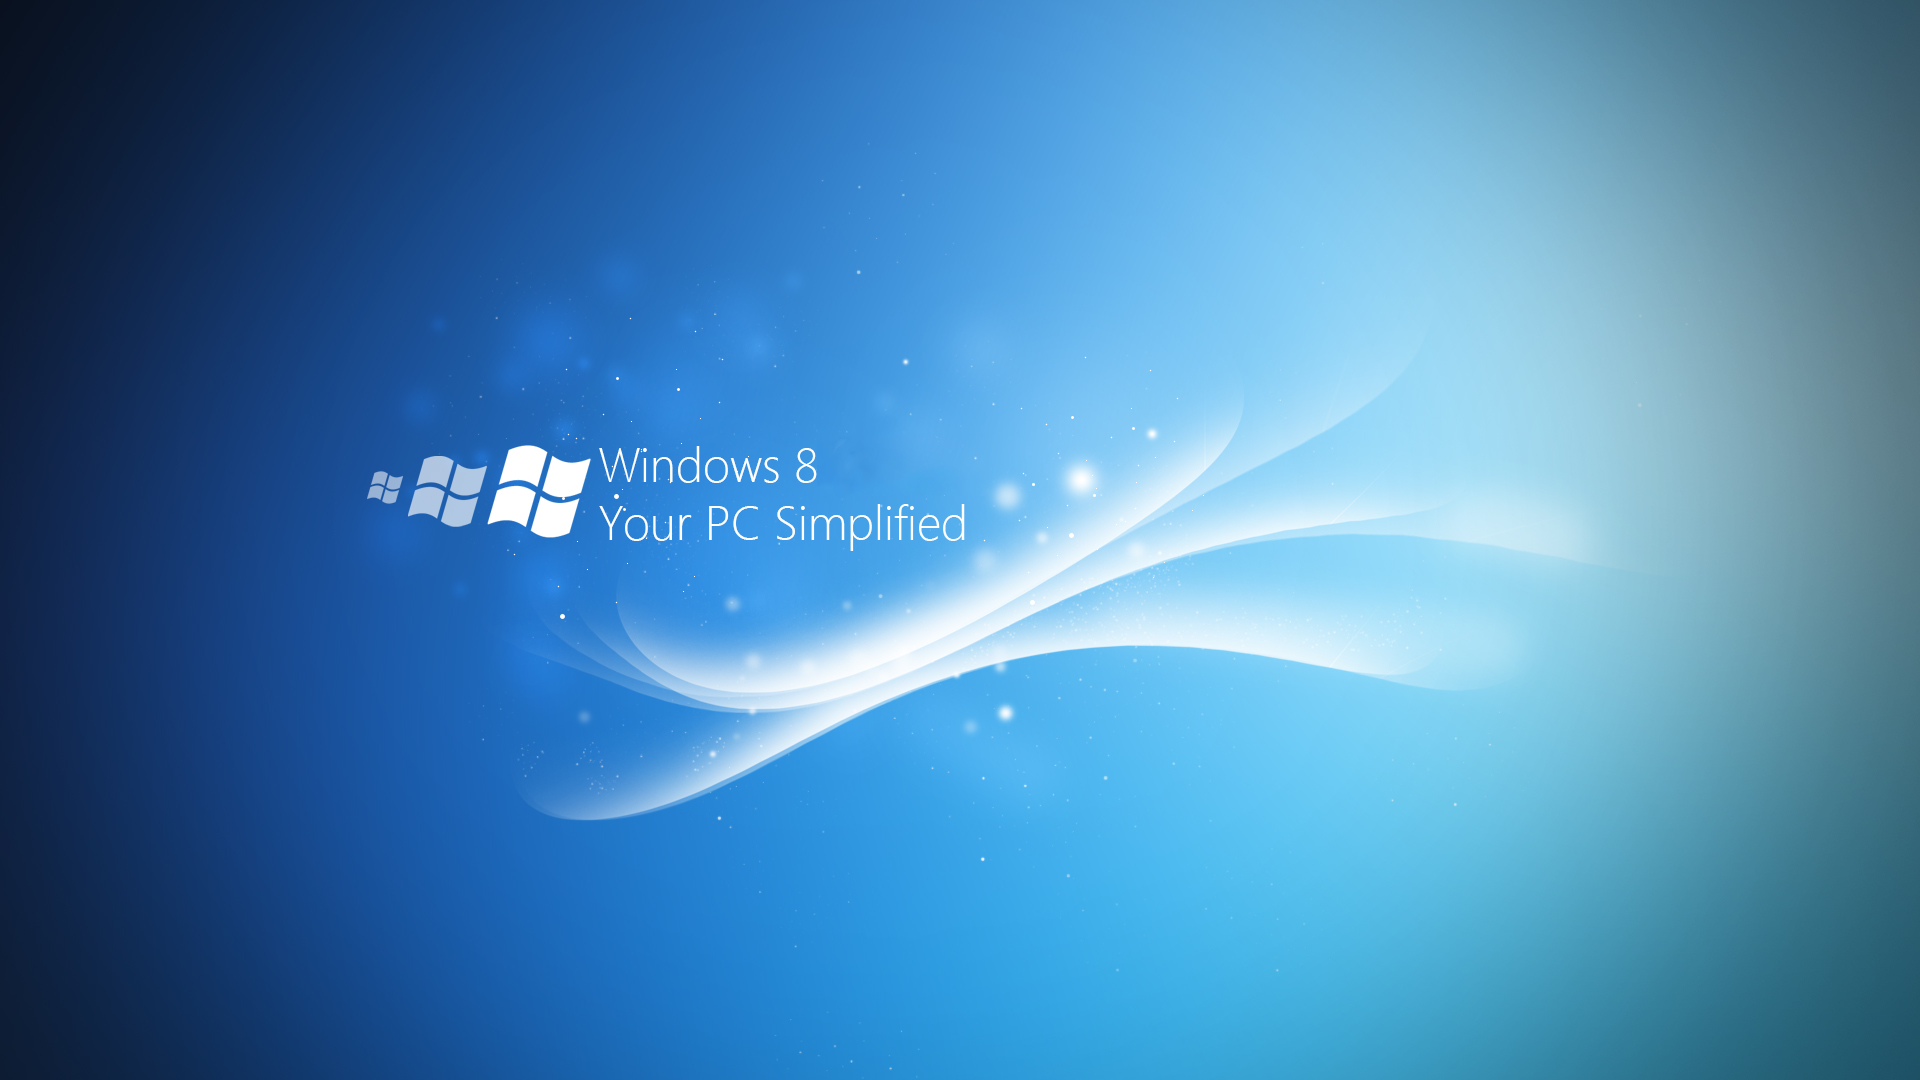 Windows 8 Desktop Background wallpaper   637199 1920x1080